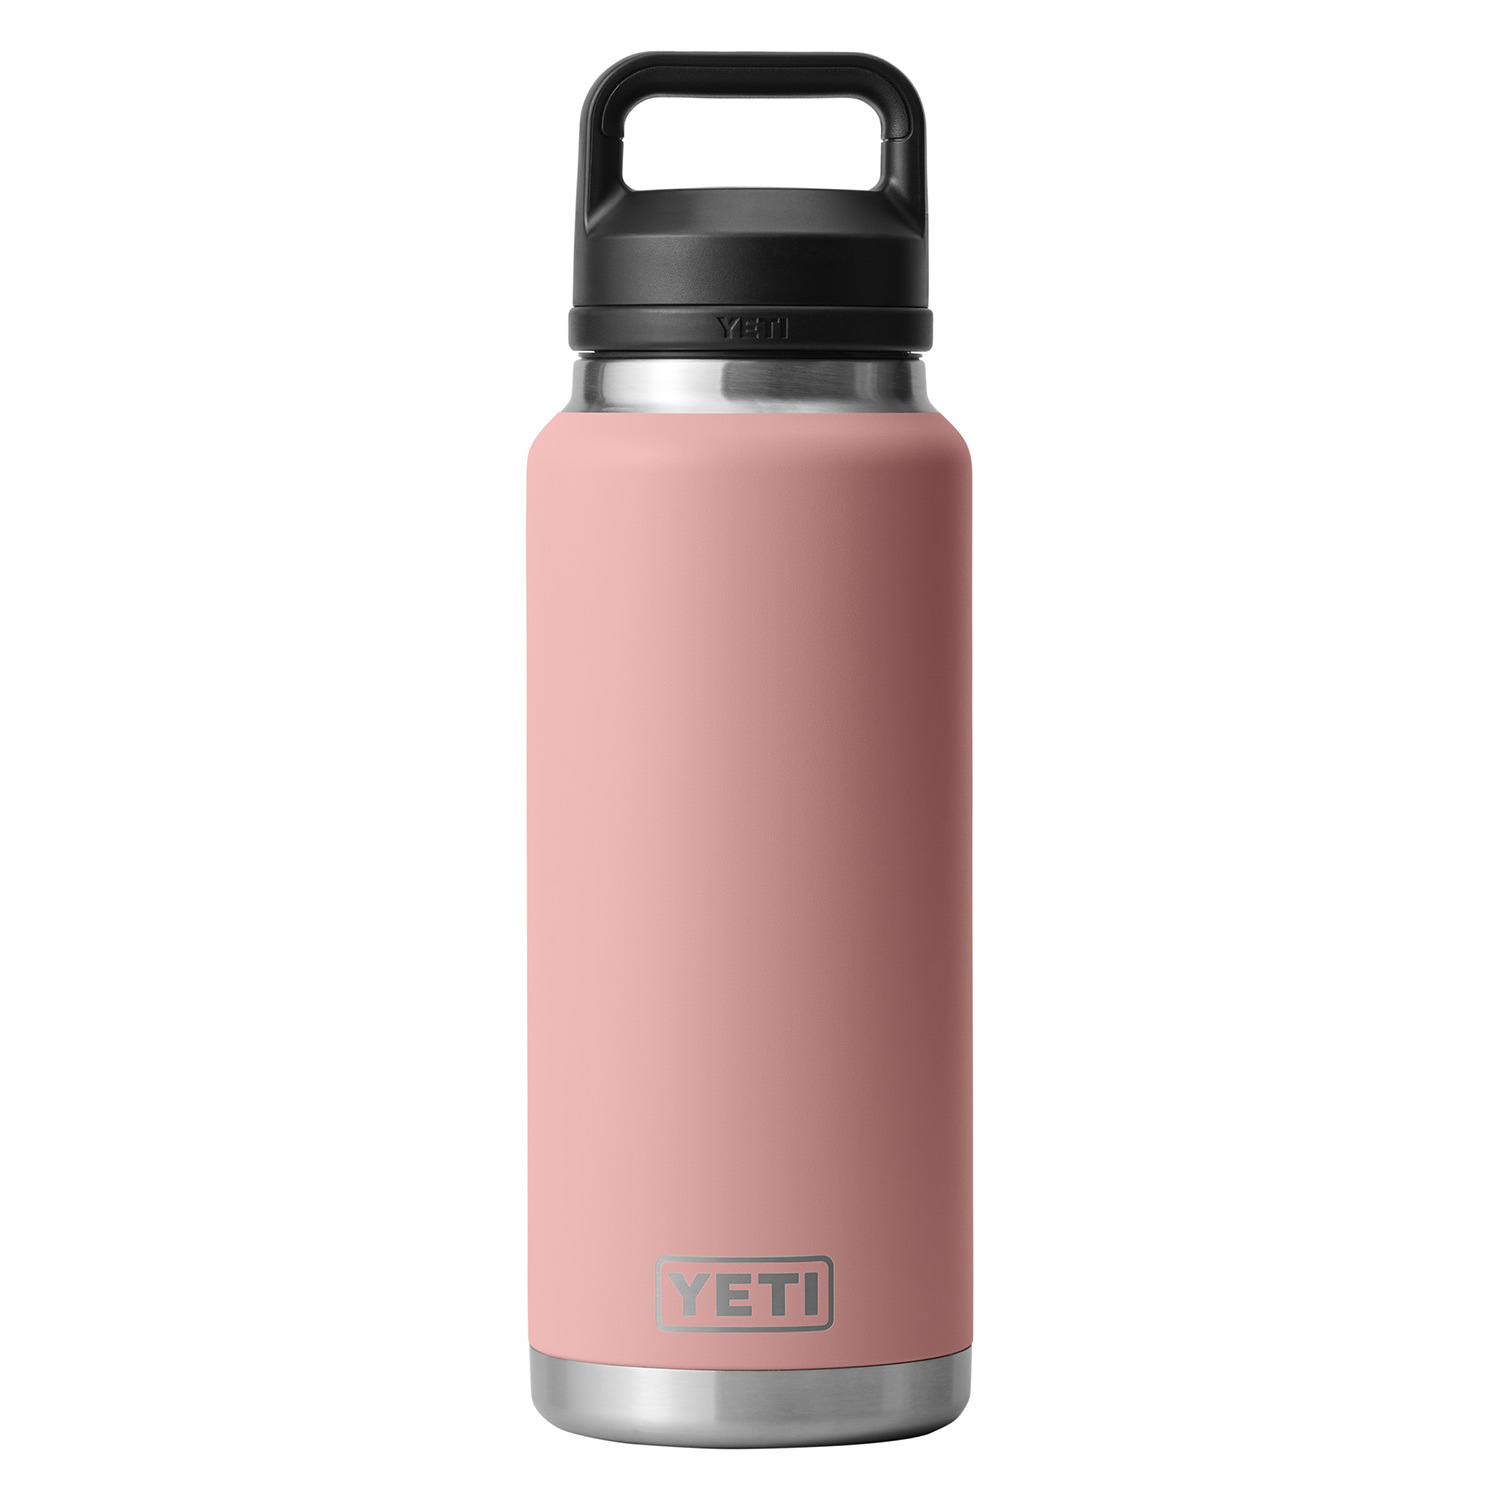 Yeti Rambler 18oz Bottle Chug Lid-Bimini Pink